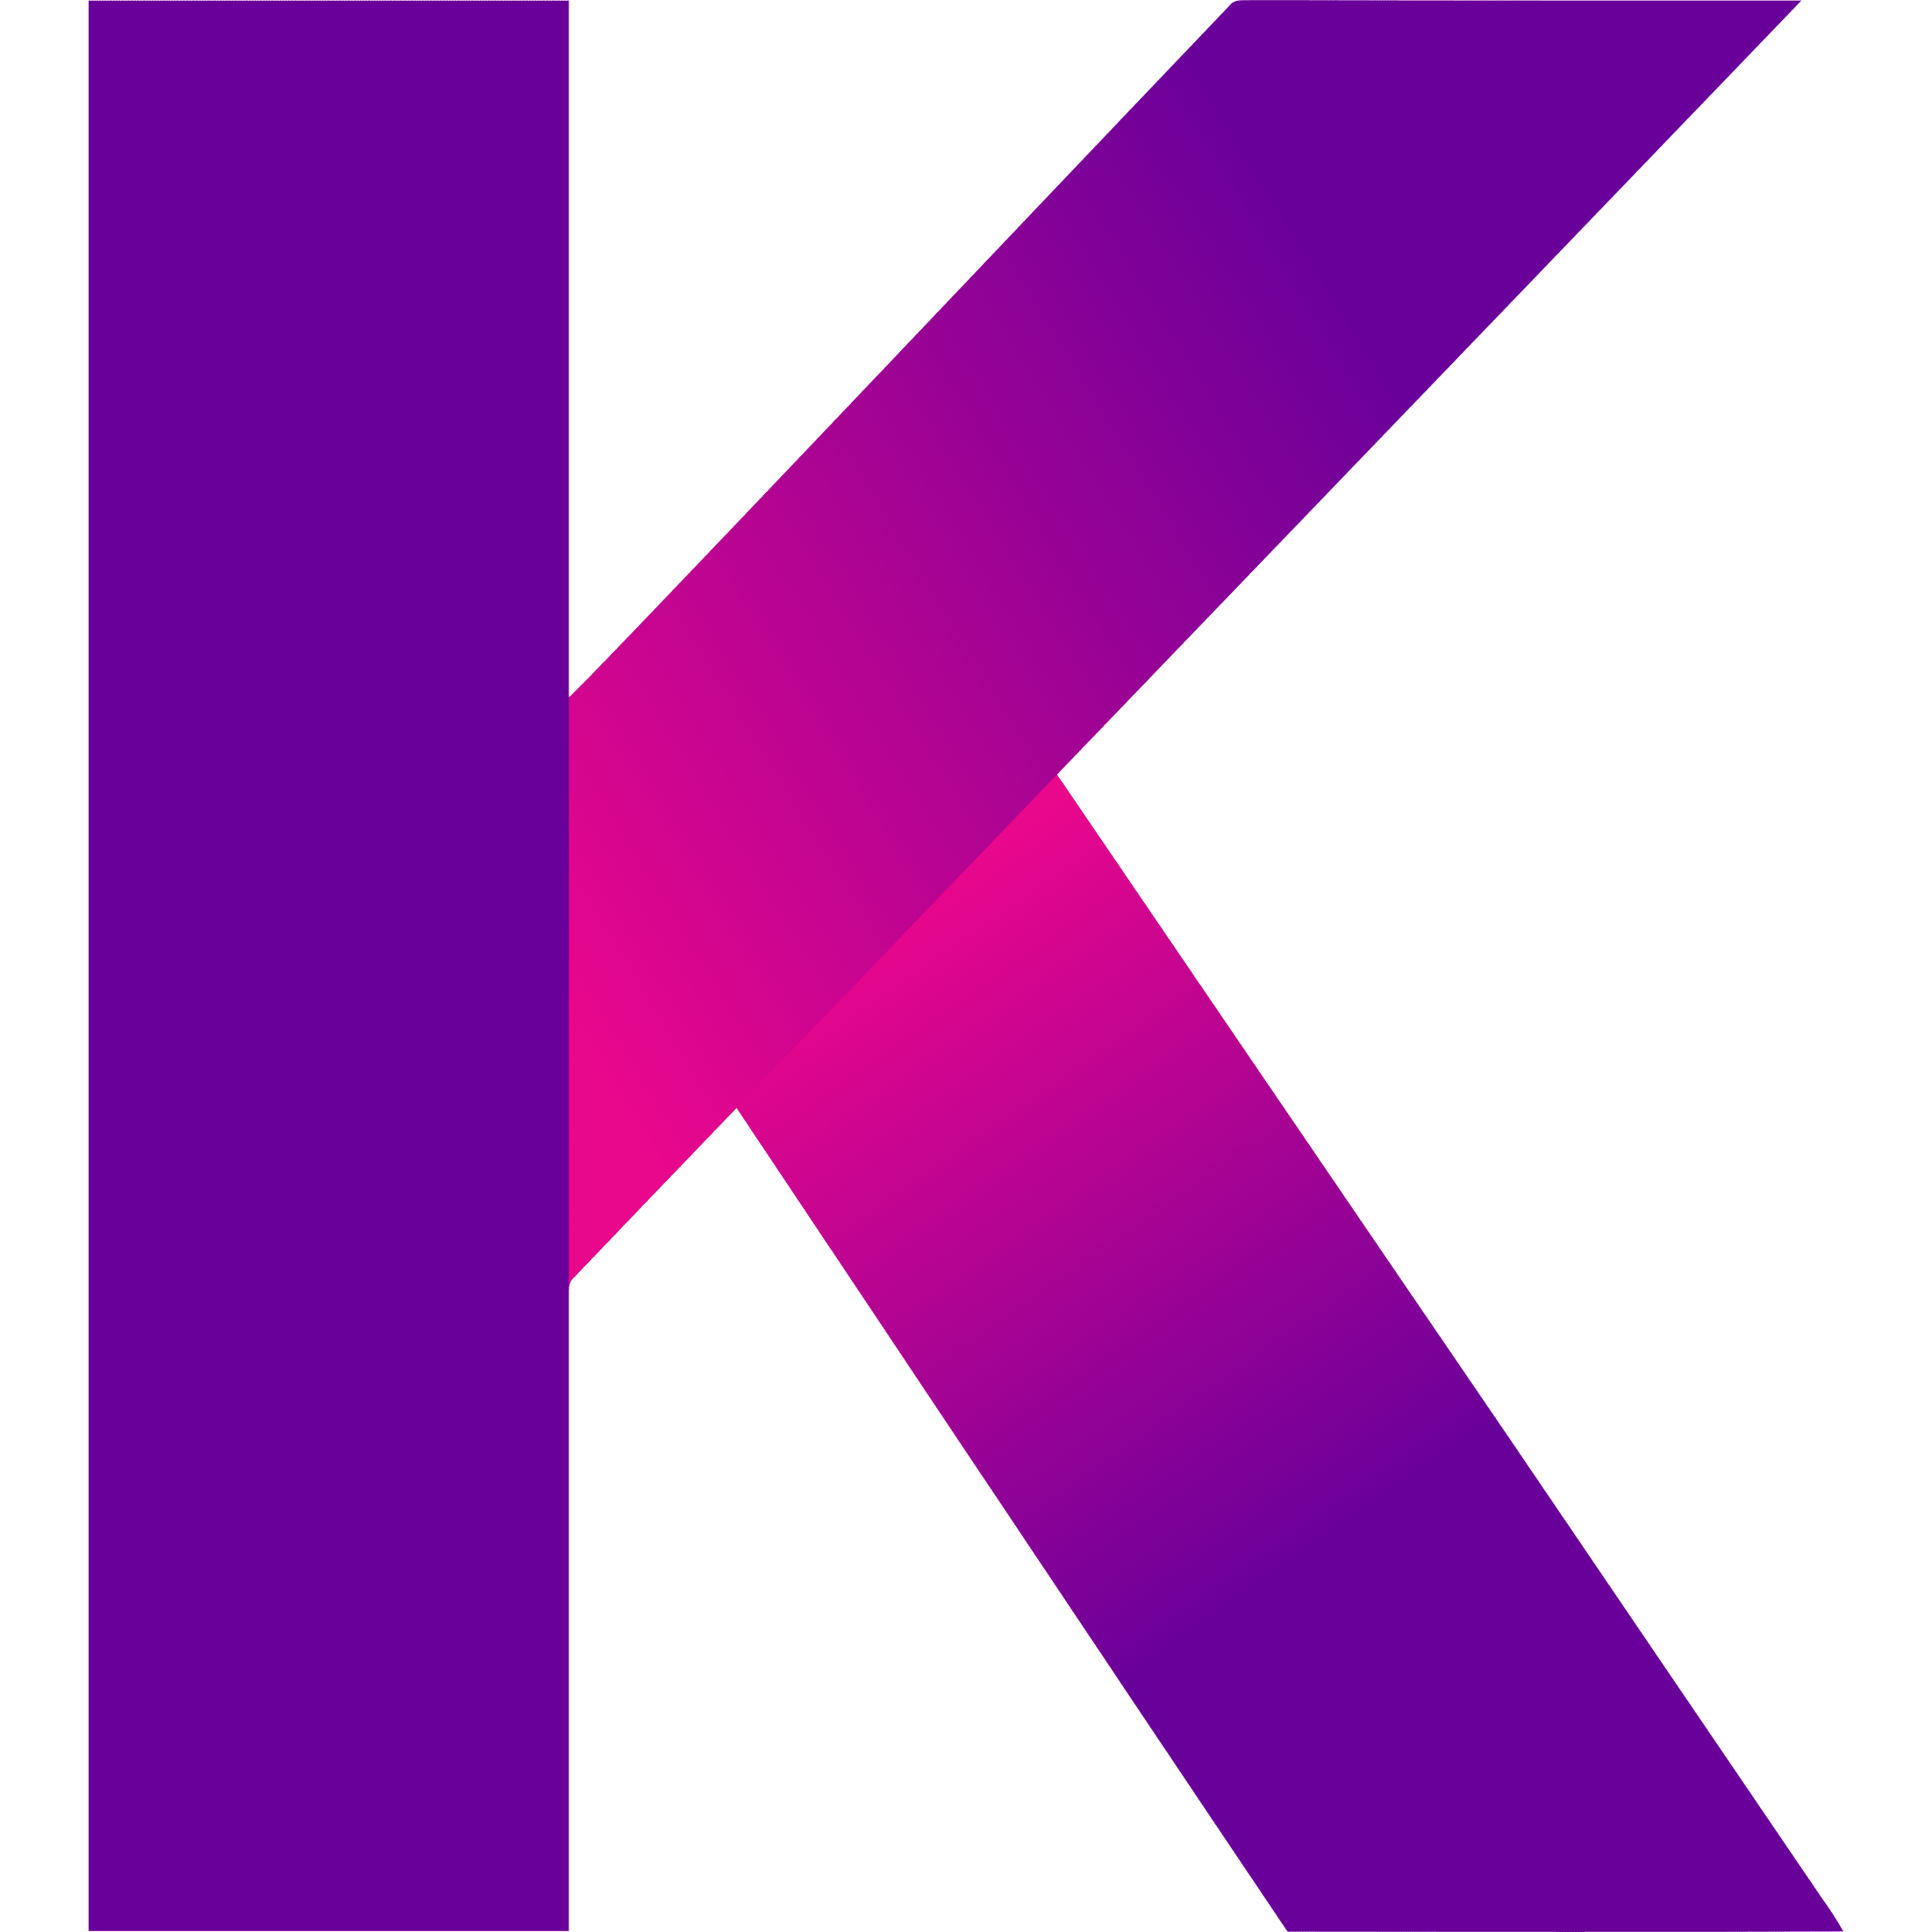 Kadena logo in png format